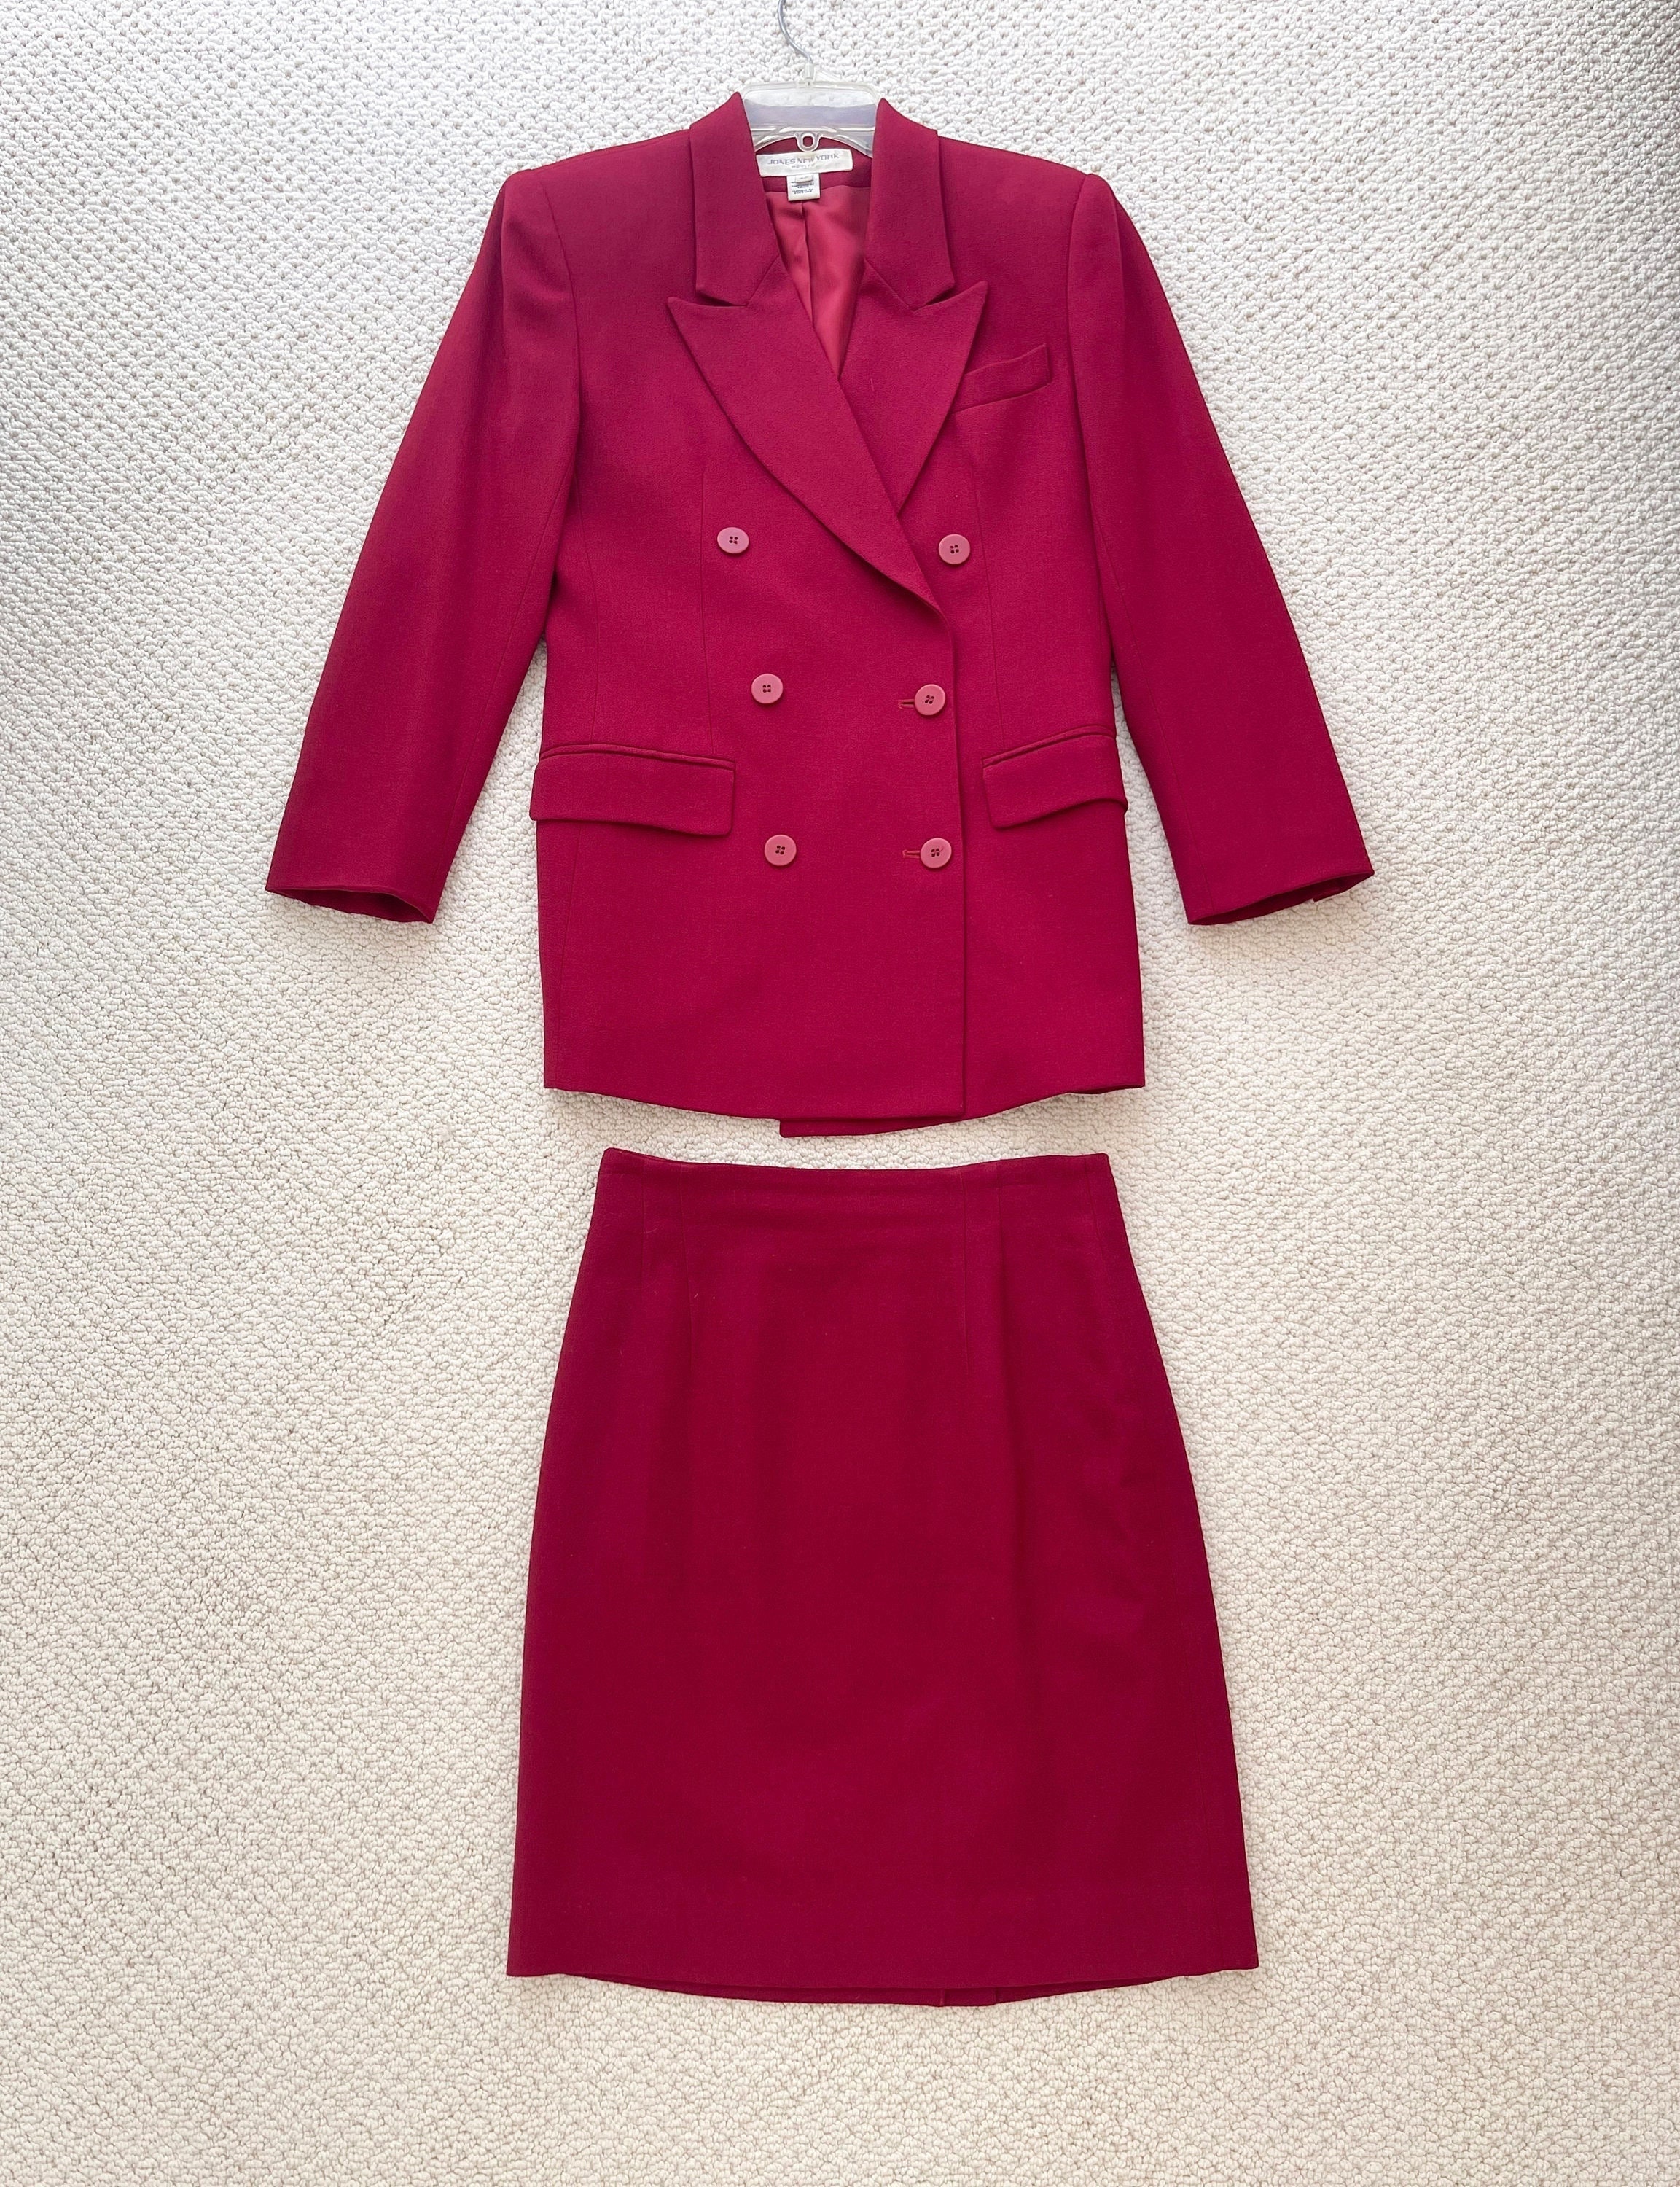 Duchessduvintage 90s Burgundy blazer and skirt set size 14 petite